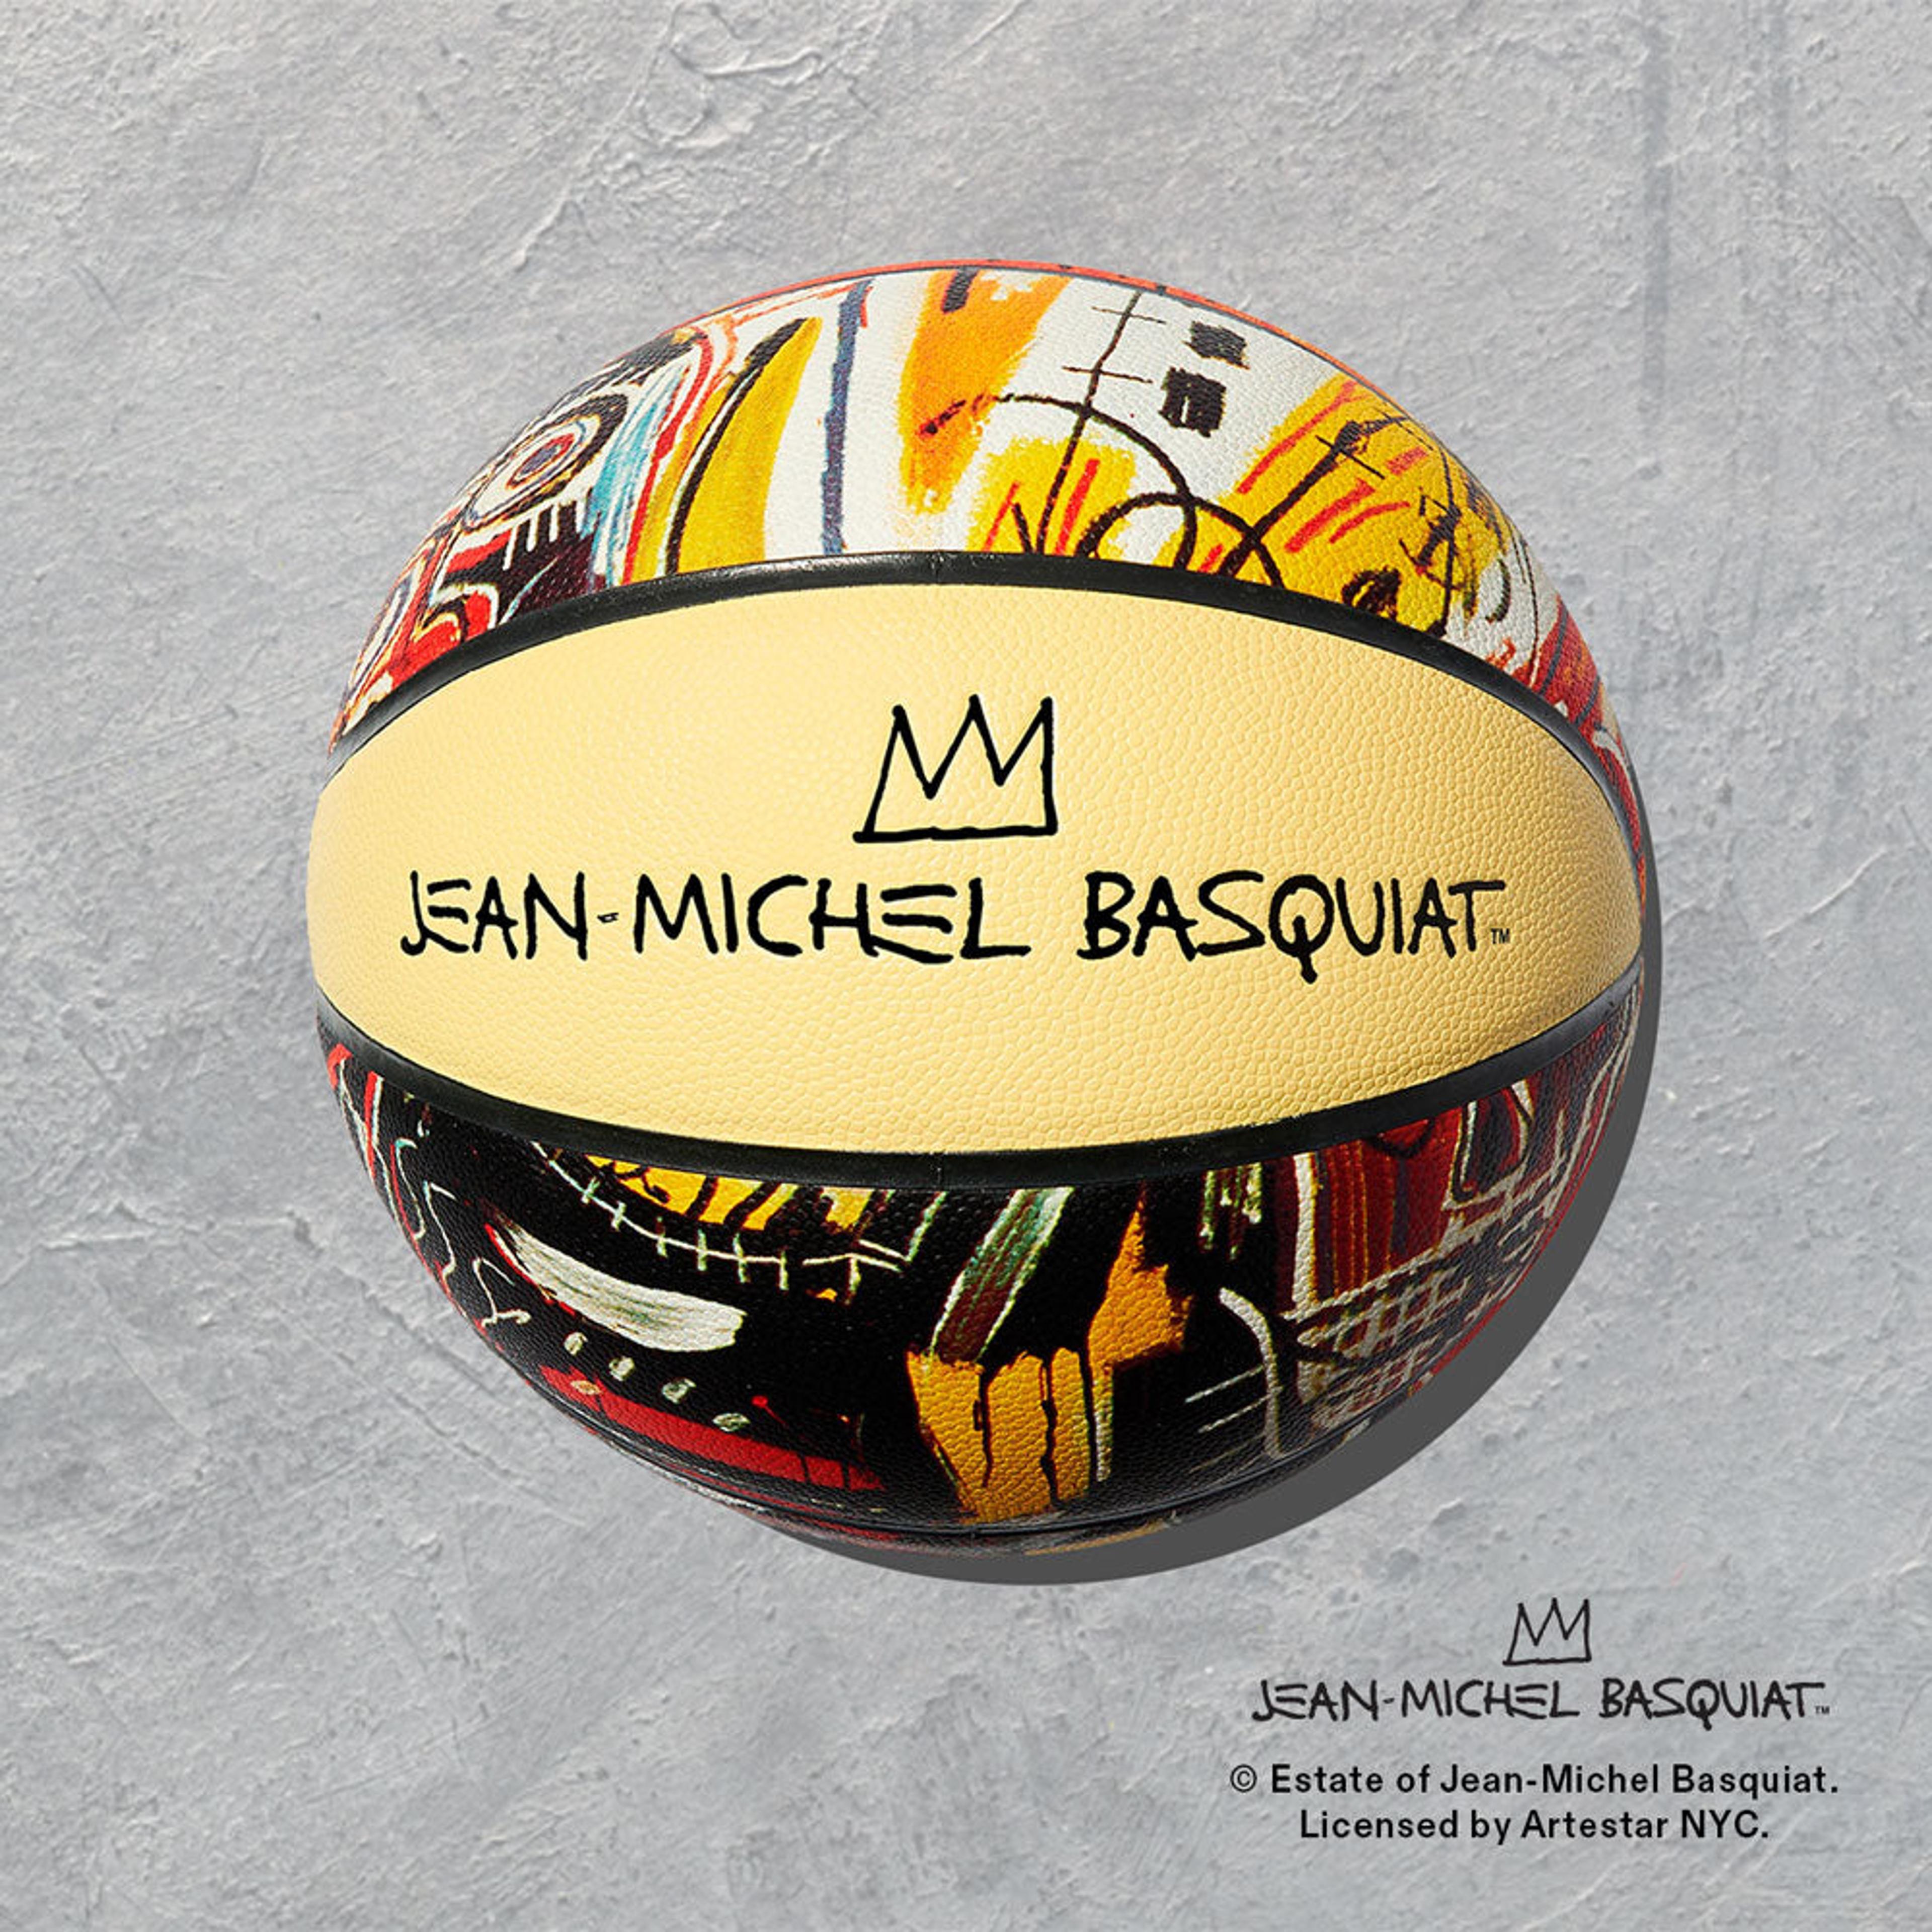 Jean-Micheal Basquiat  "Philistines" Basketball